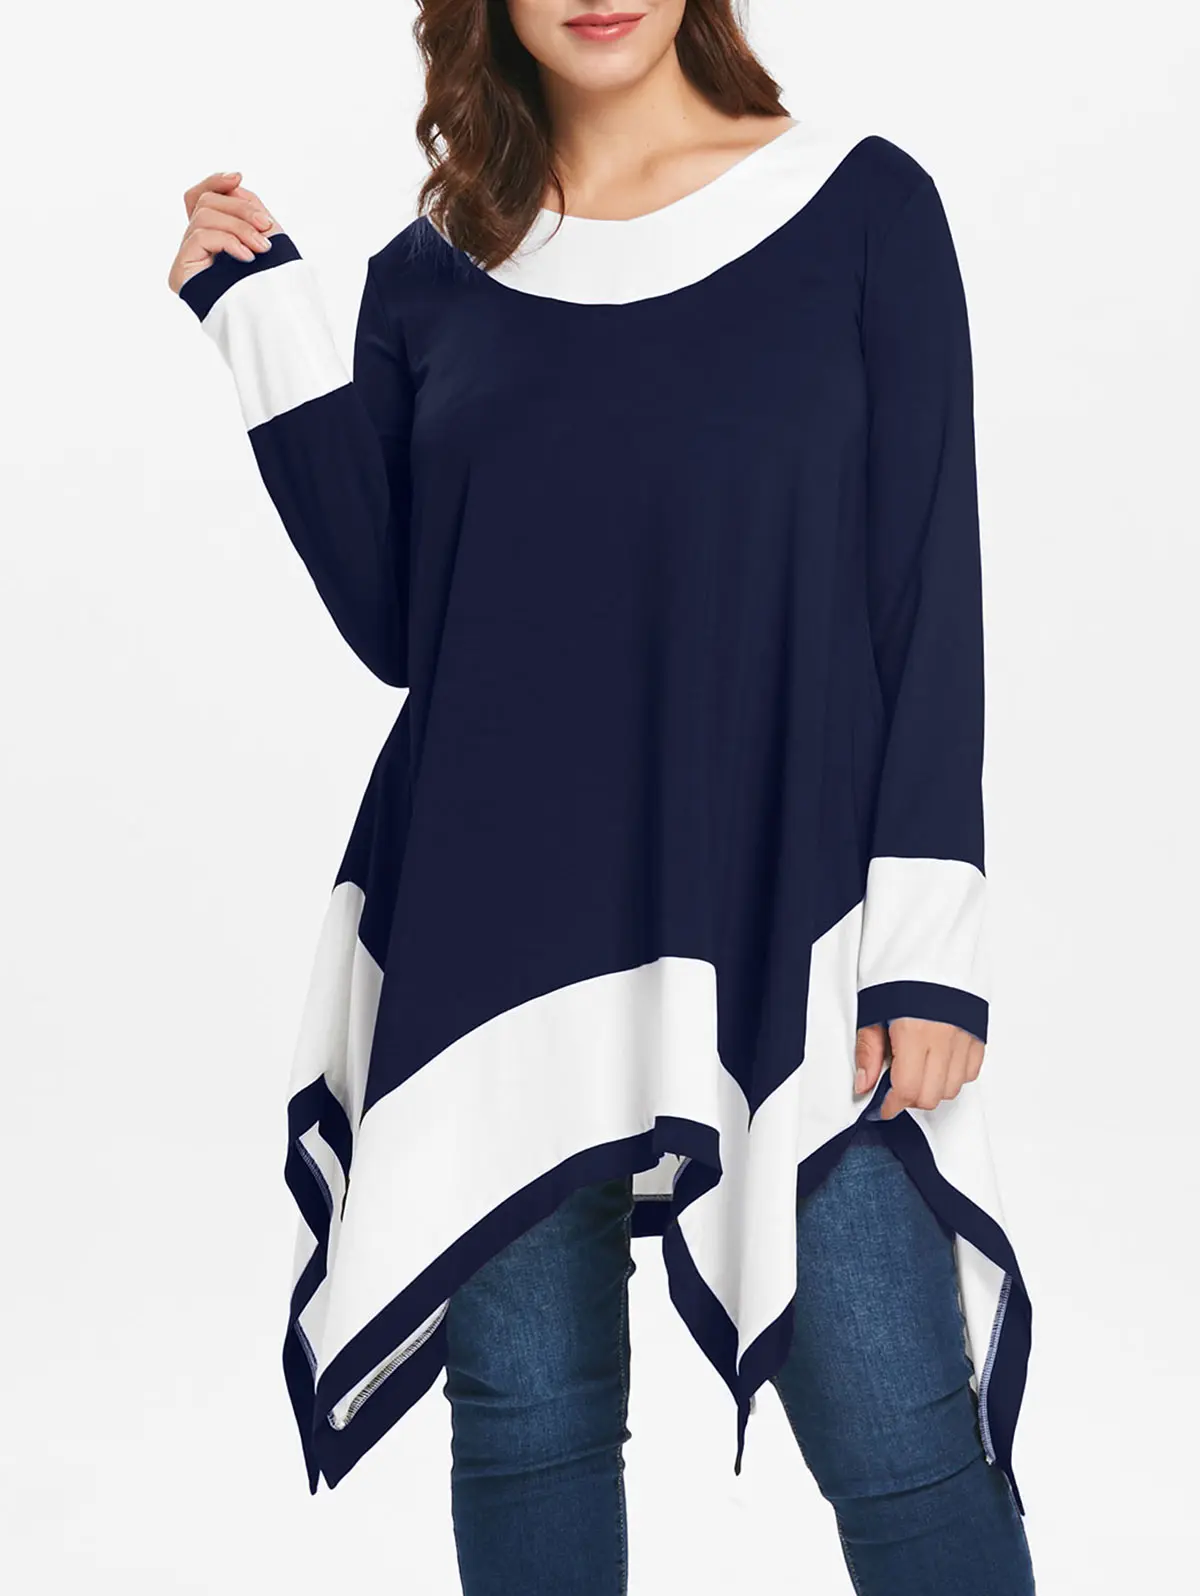  Rosegal Plus Size Contrast Long Sleeve Handkerchief T-Shirt Female Autumn T Shirt Ladies Tops Women